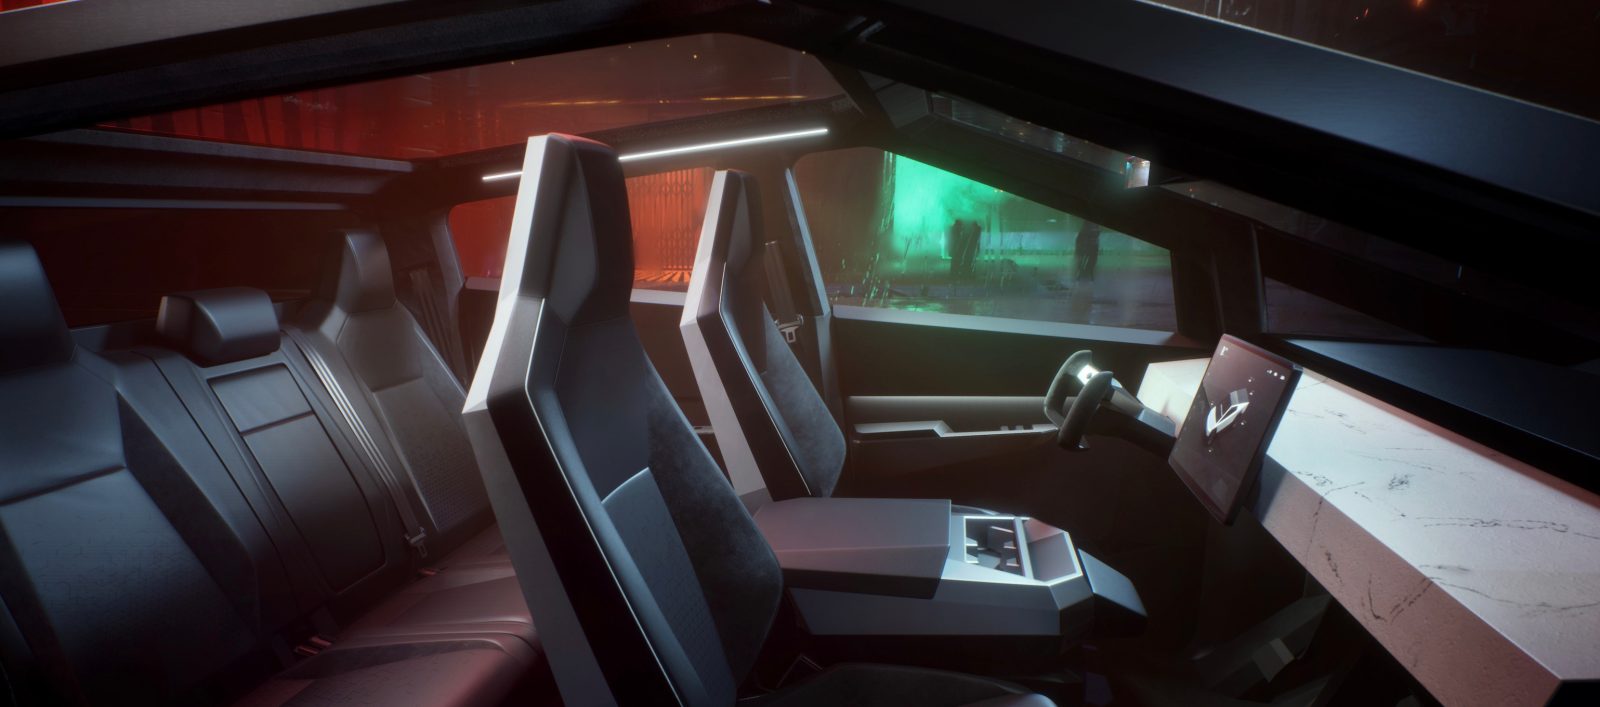 photo of Tesla Cybertruck will have yoke steering wheel, Elon Musk says will be a ‘tech bandwagon’ image